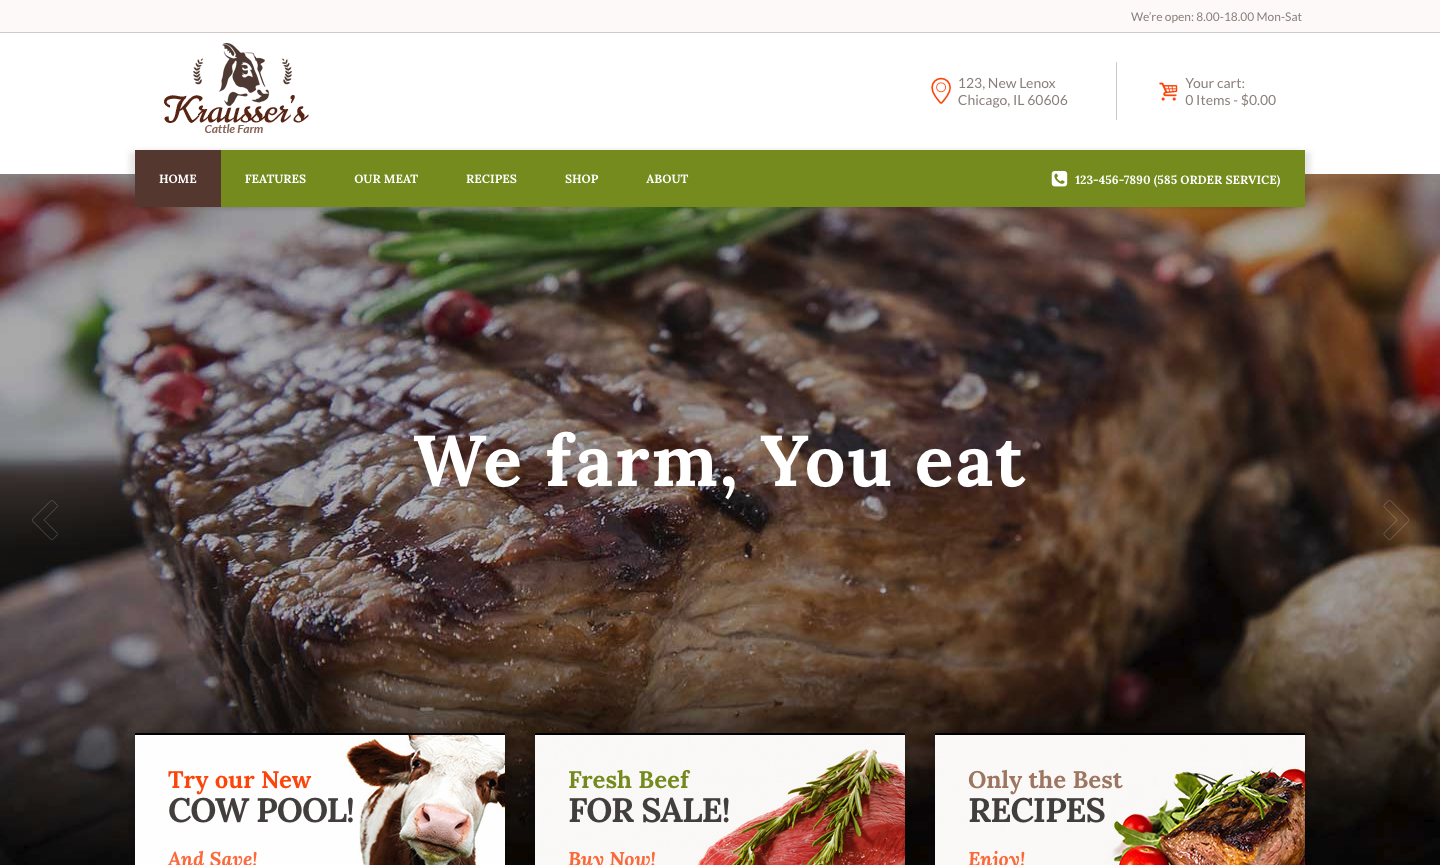 Krausser's | Cattle Farm & Produce Market WordPress Theme.png